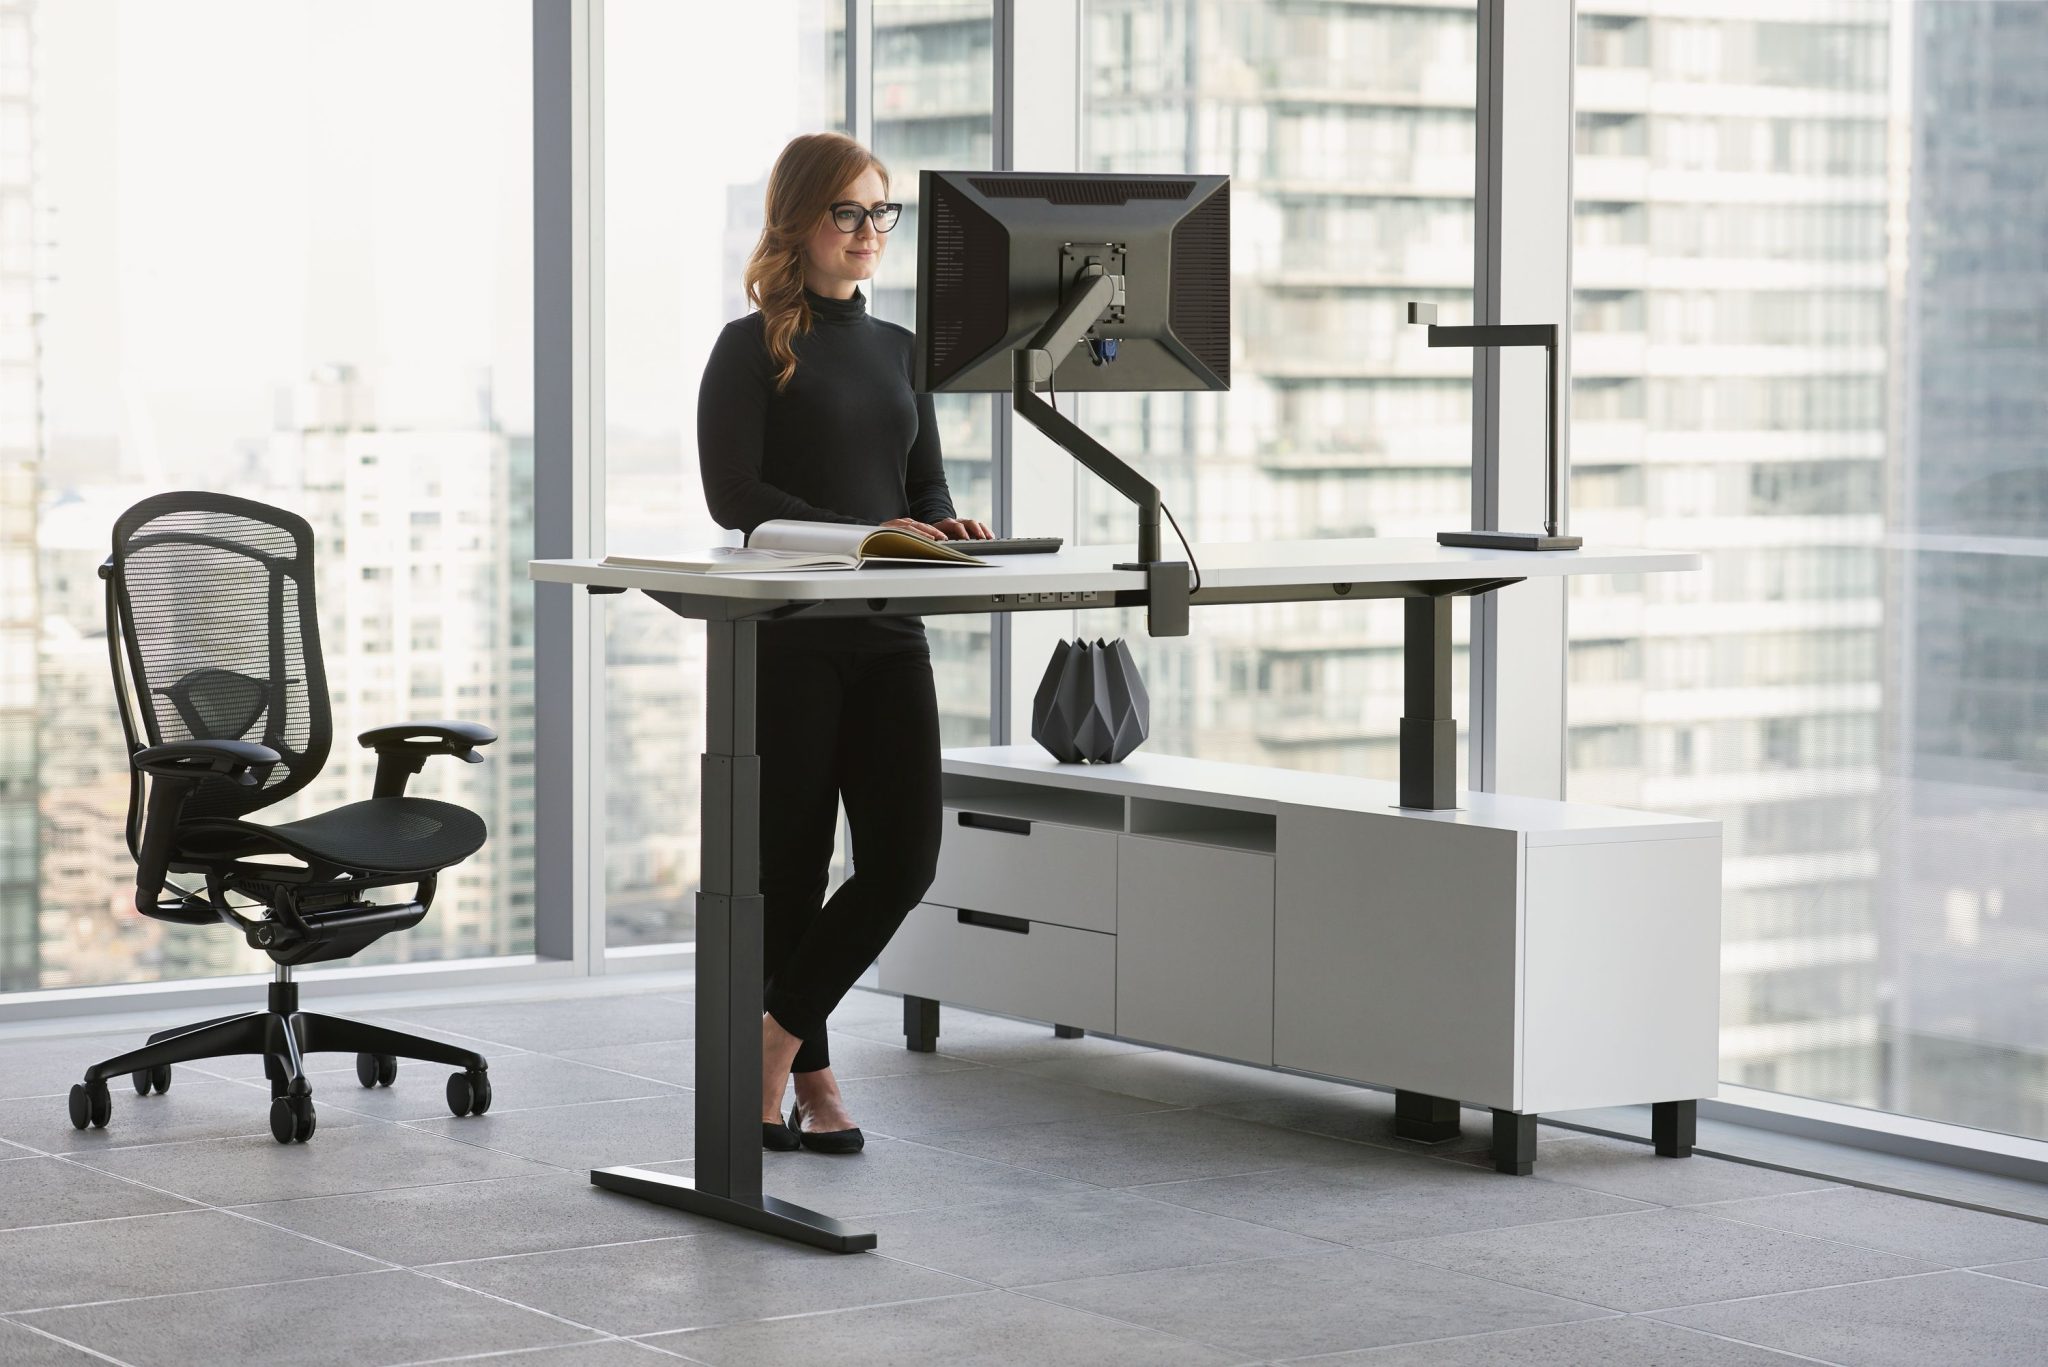 How Ergonomic Furniture Can Improve Office Productivity